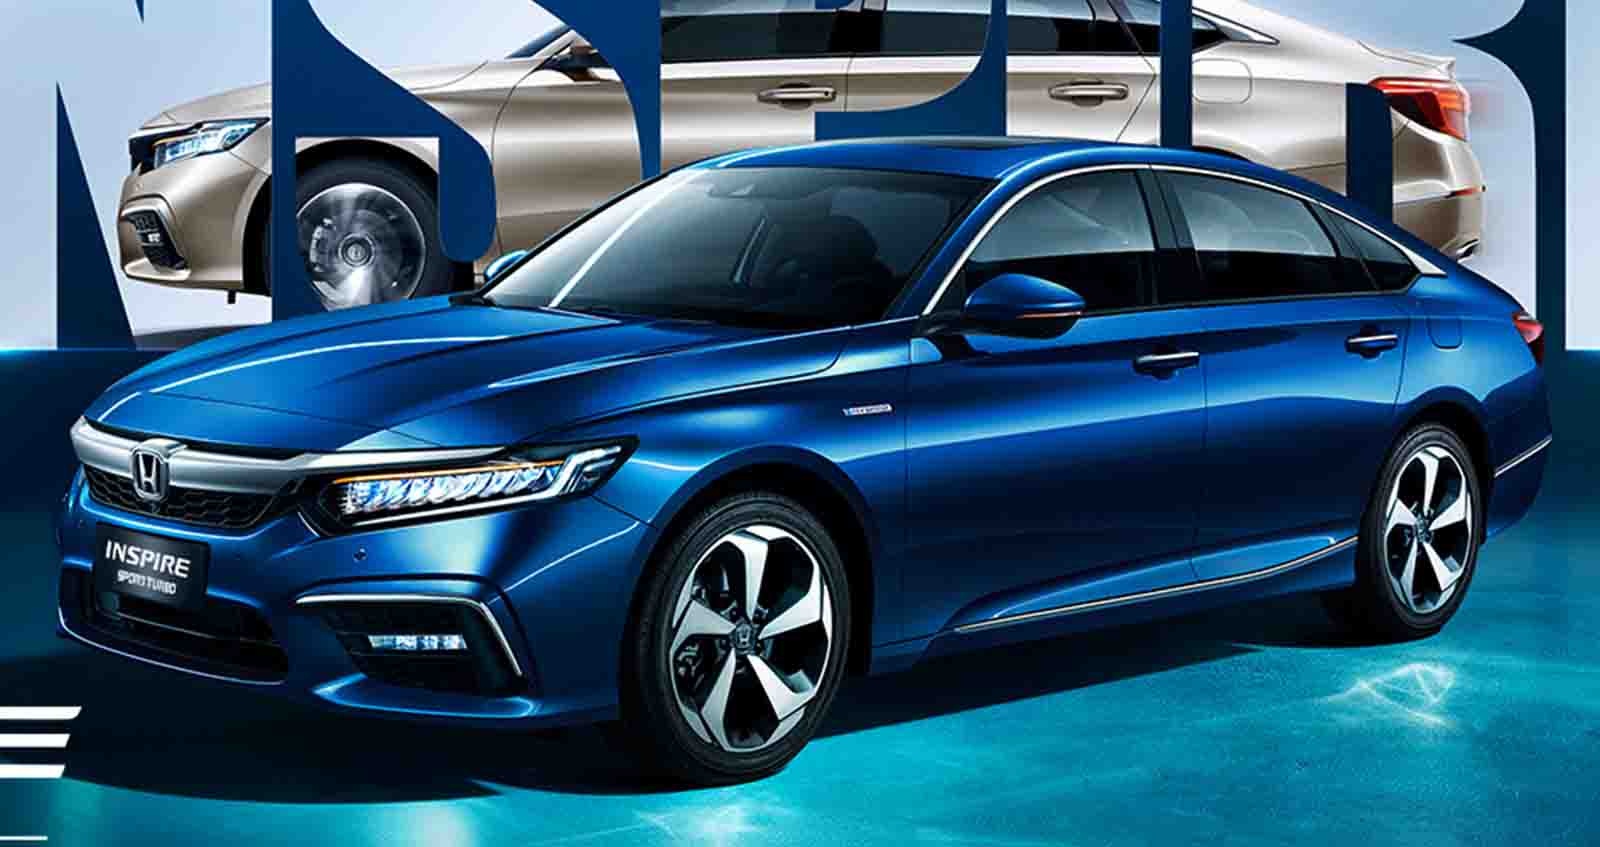 Honda Inspire ราคา 840,000 บาท ใหม่ ในจีน 1.5T 191 แรงม้า